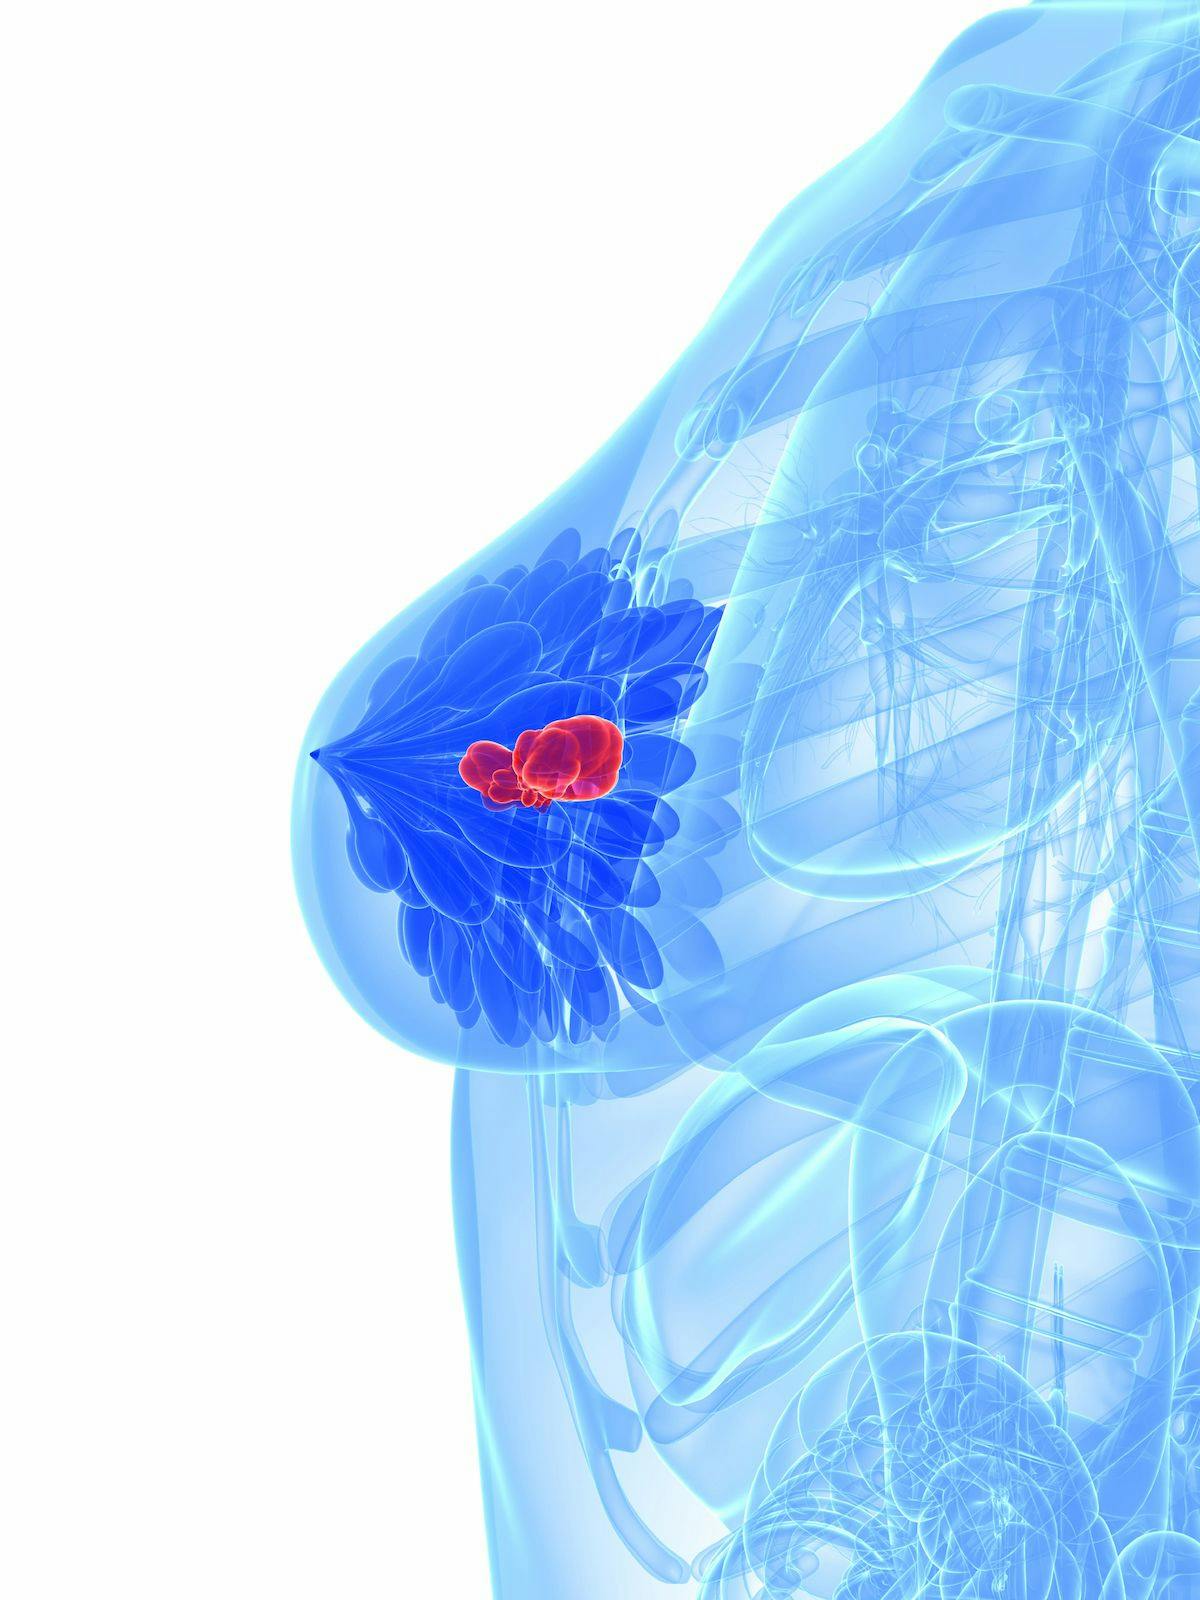 Samuraciclib Plus Fulvestrant Shows Tumor Shrinkage in HR+ Breast Cancer